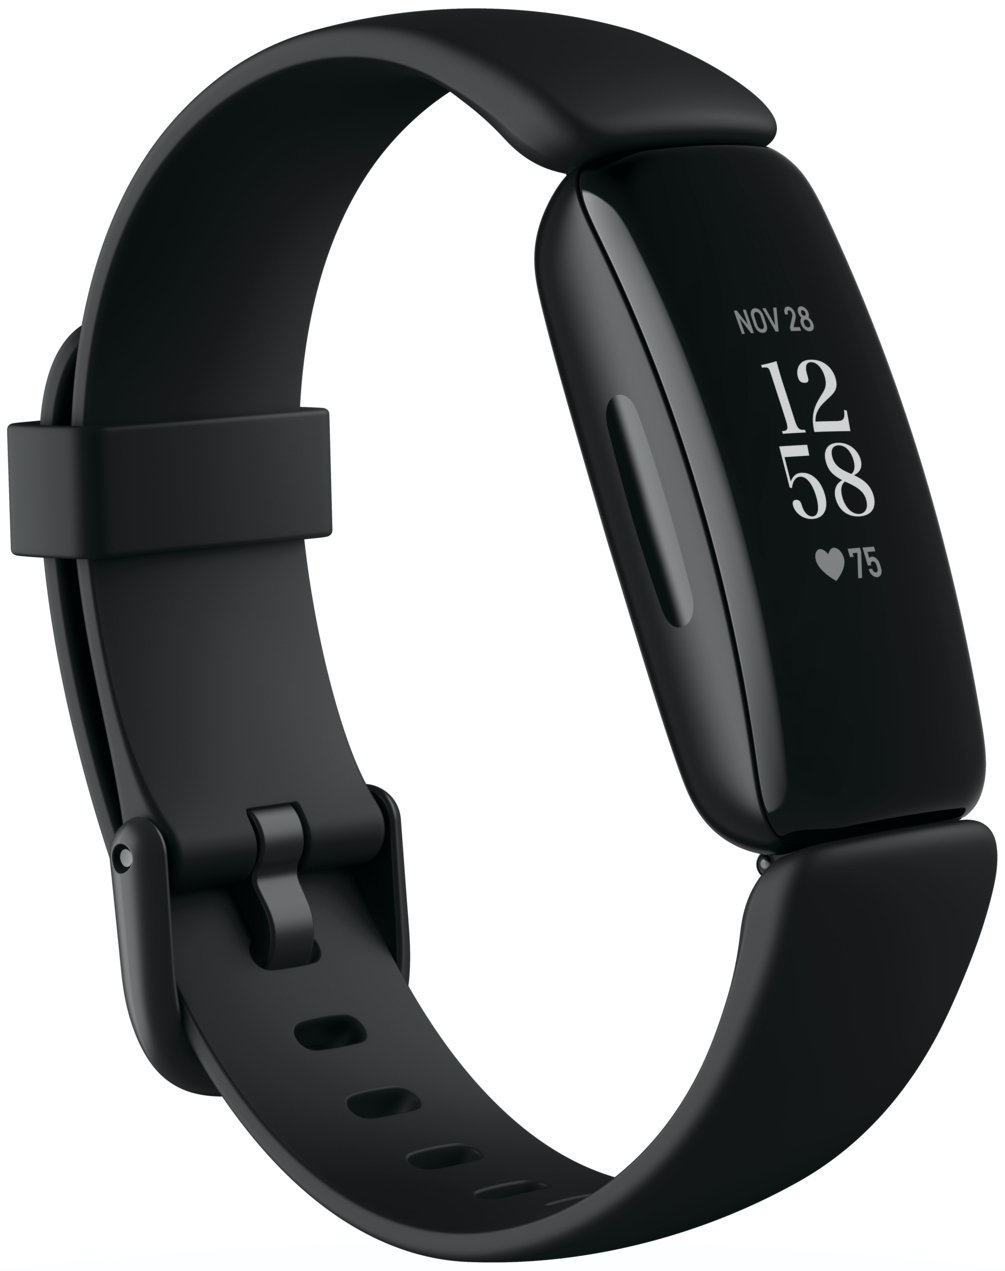 Representación del producto Fitbit Inspire 2, vista 3QTR, en negro.